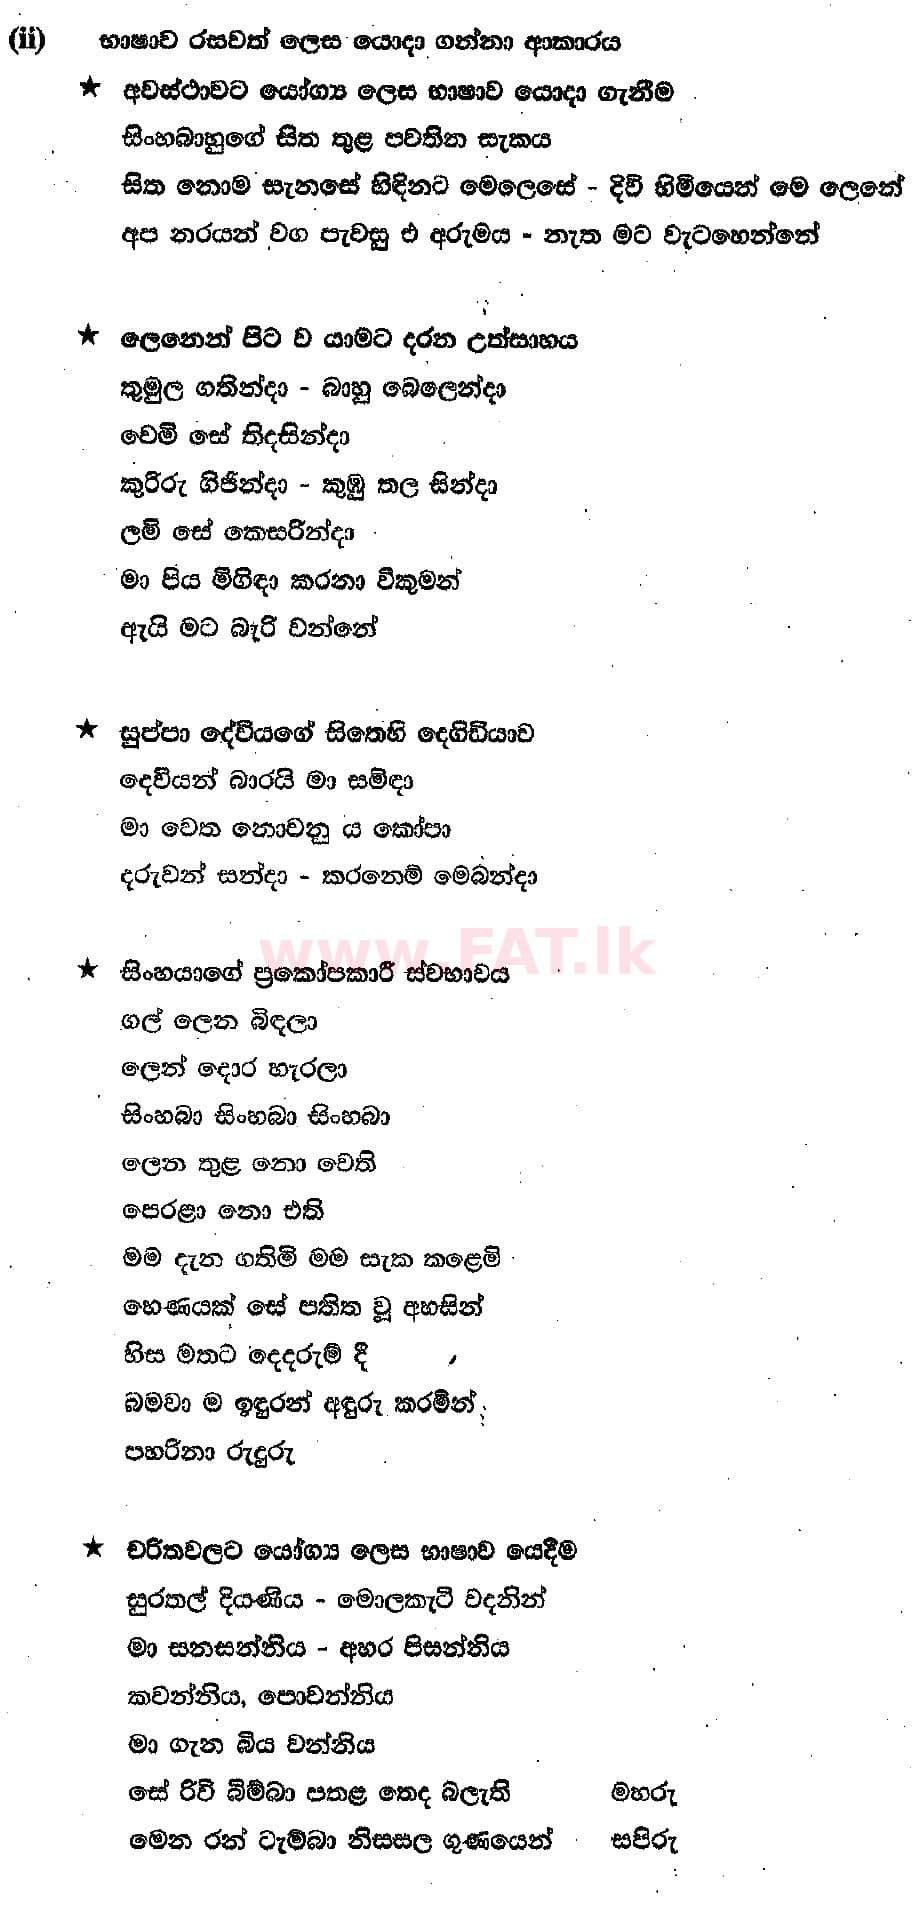 National Syllabus : Ordinary Level (O/L) Sinhala Language and Literature - 2018 December - Paper III (සිංහල Medium) 4 5482